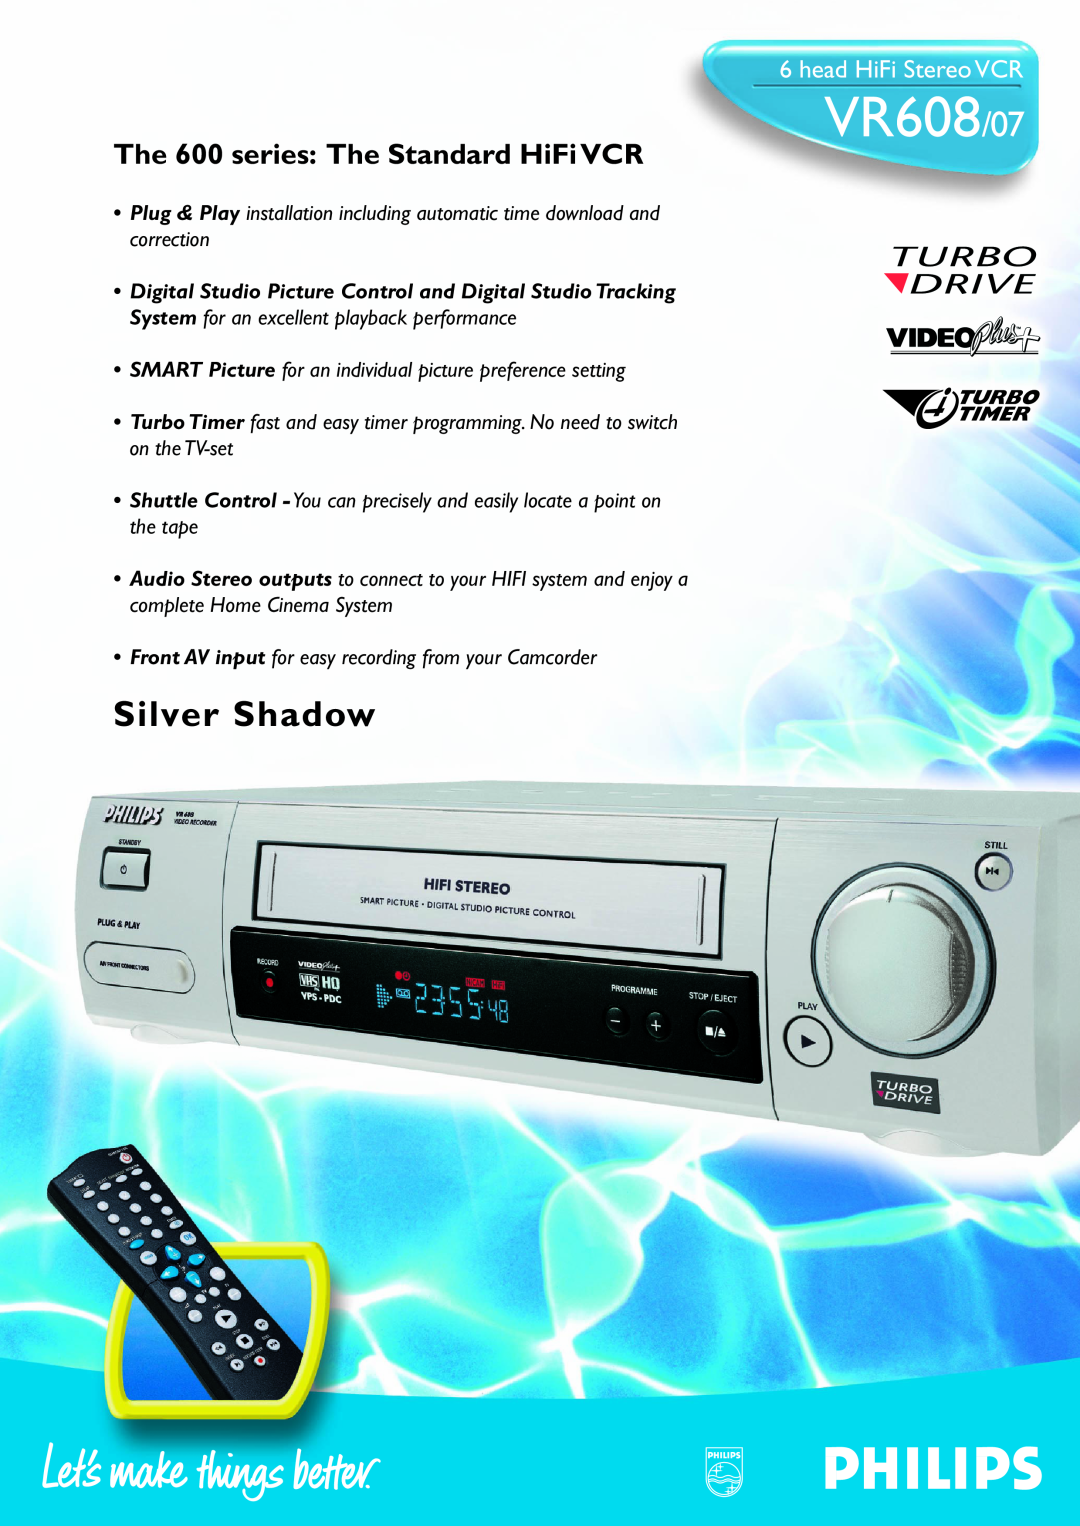 Philips VR608 manual head HiFi Stereo VCR, Green Silver, The 600 series The Standard HiFi VCR 